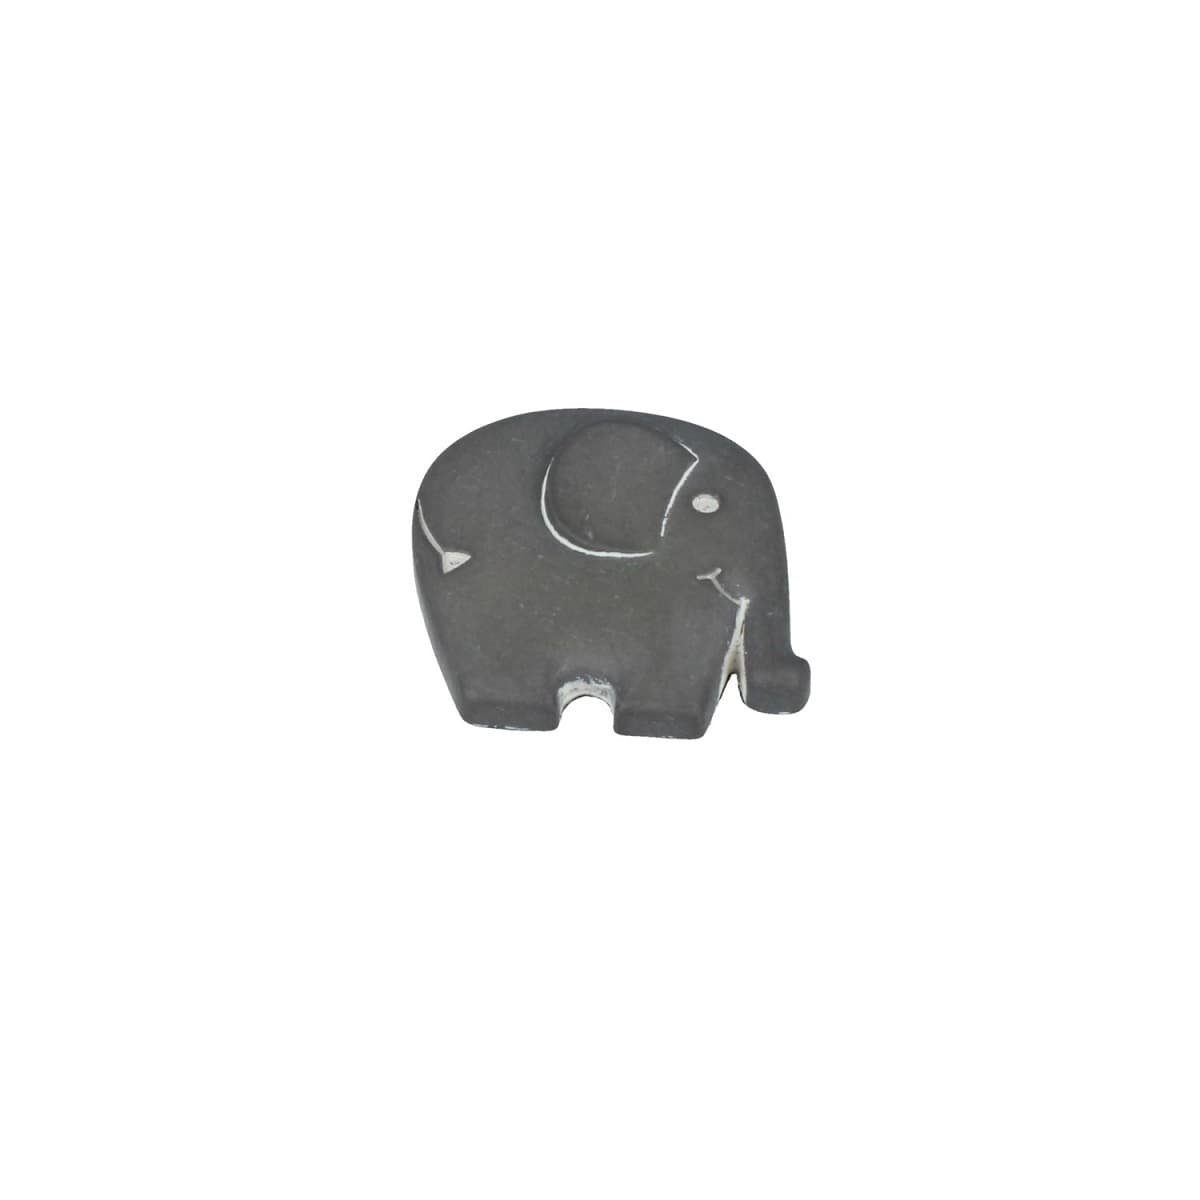 MS Beschläge Türbeschlag Möbelknopf Kinderzimmerknopf Modell Elefant